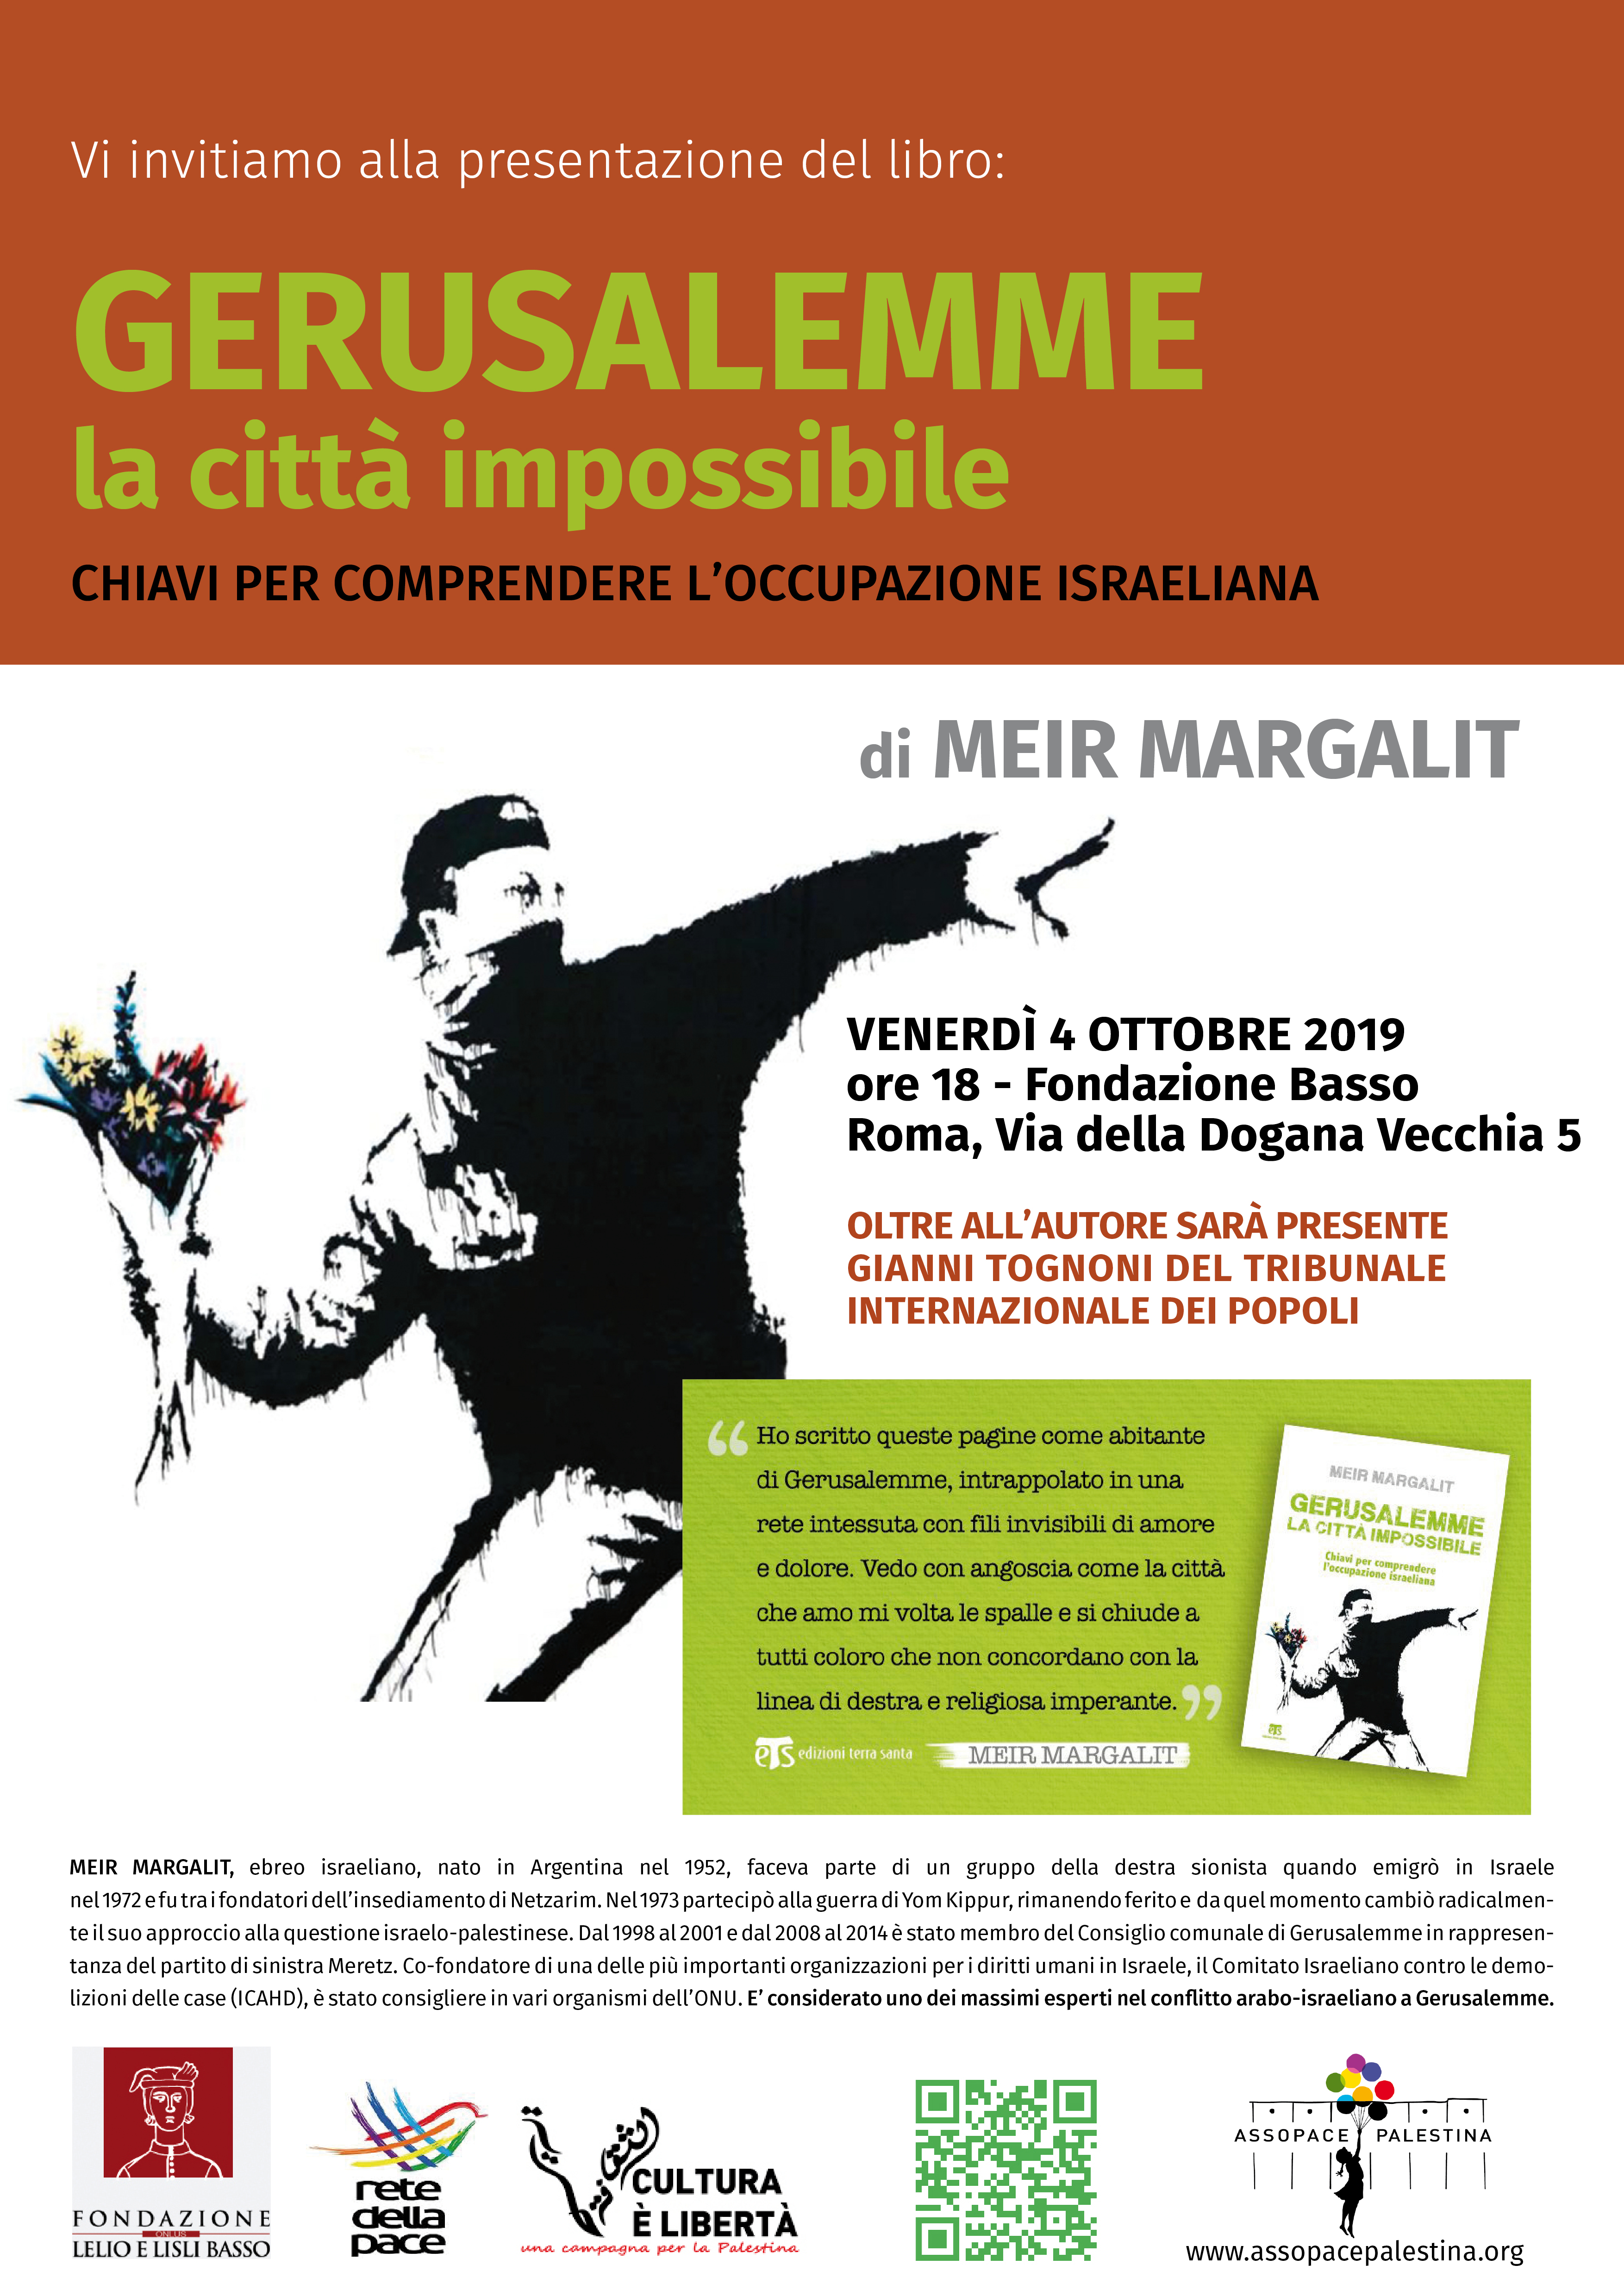 Roma 4 ottobre: Meir Margalit presenta il suo libro su Gerusalemme